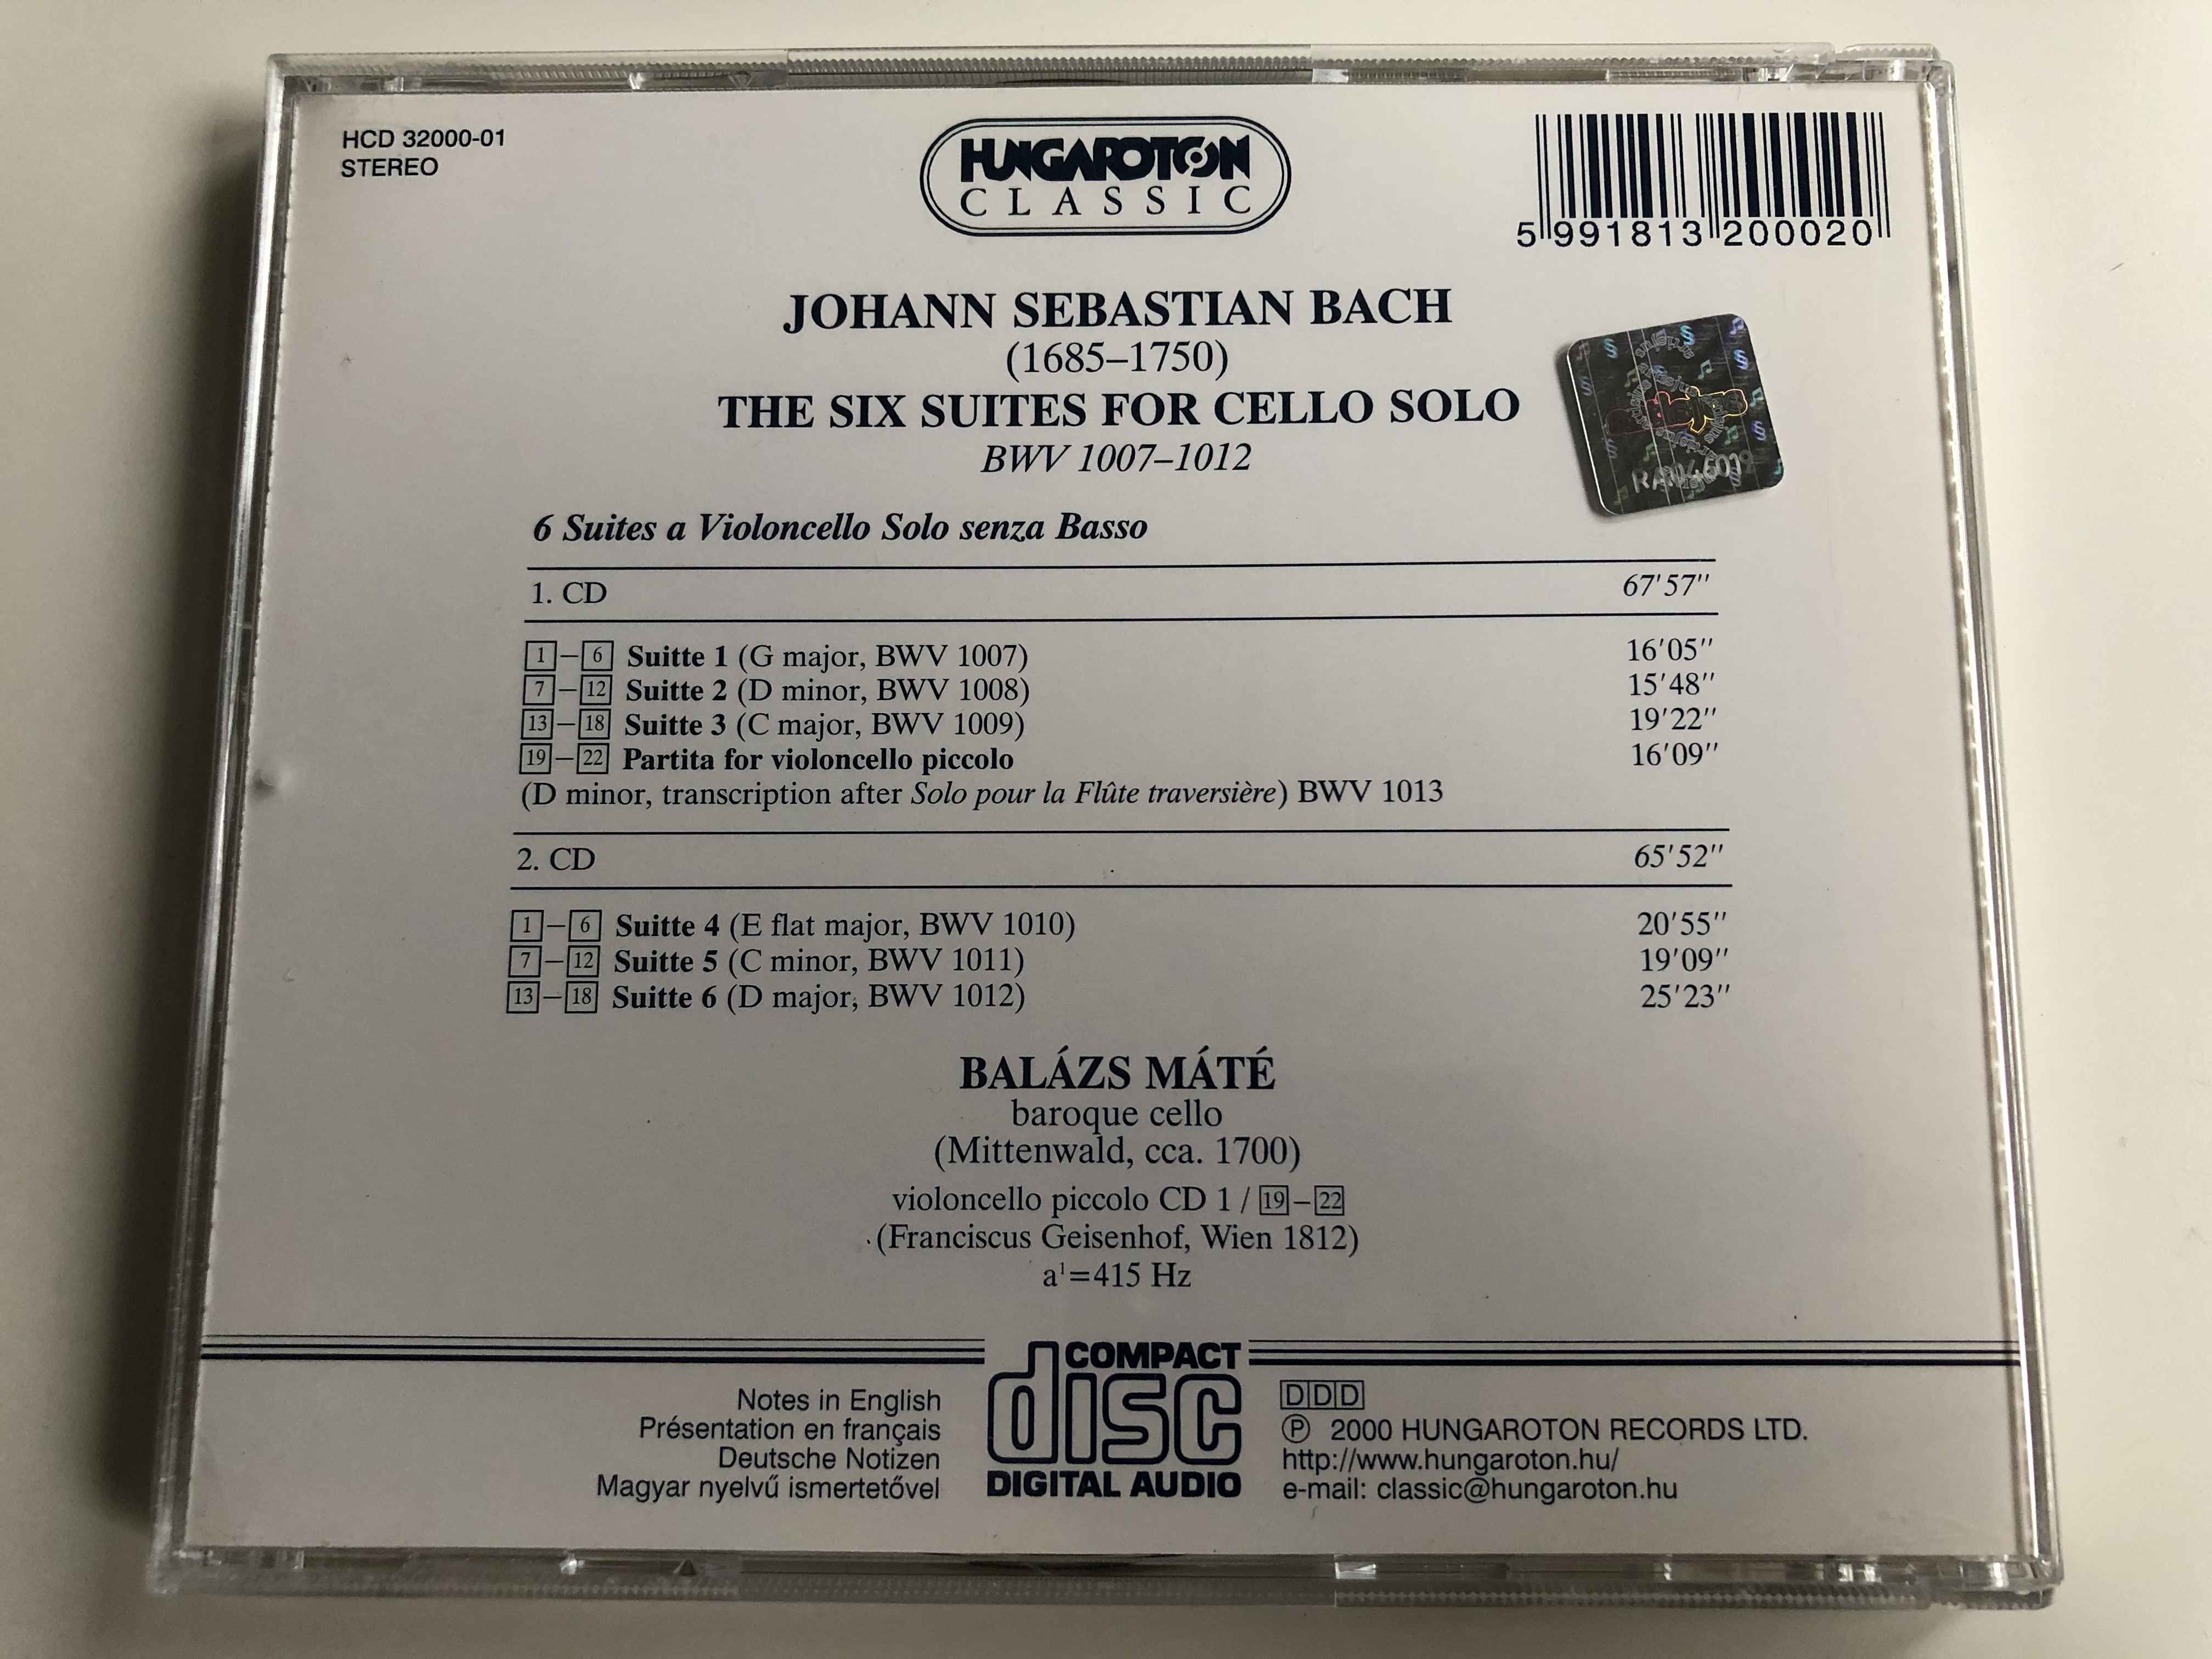 johann-sebastian-bach-the-six-suites-for-violoncello-solo-balazs-mate-baroque-cello-violoncello-picolo-hungaroton-classic-2x-audio-cd-2000-stereo-hcd-32000-01-9-.jpg